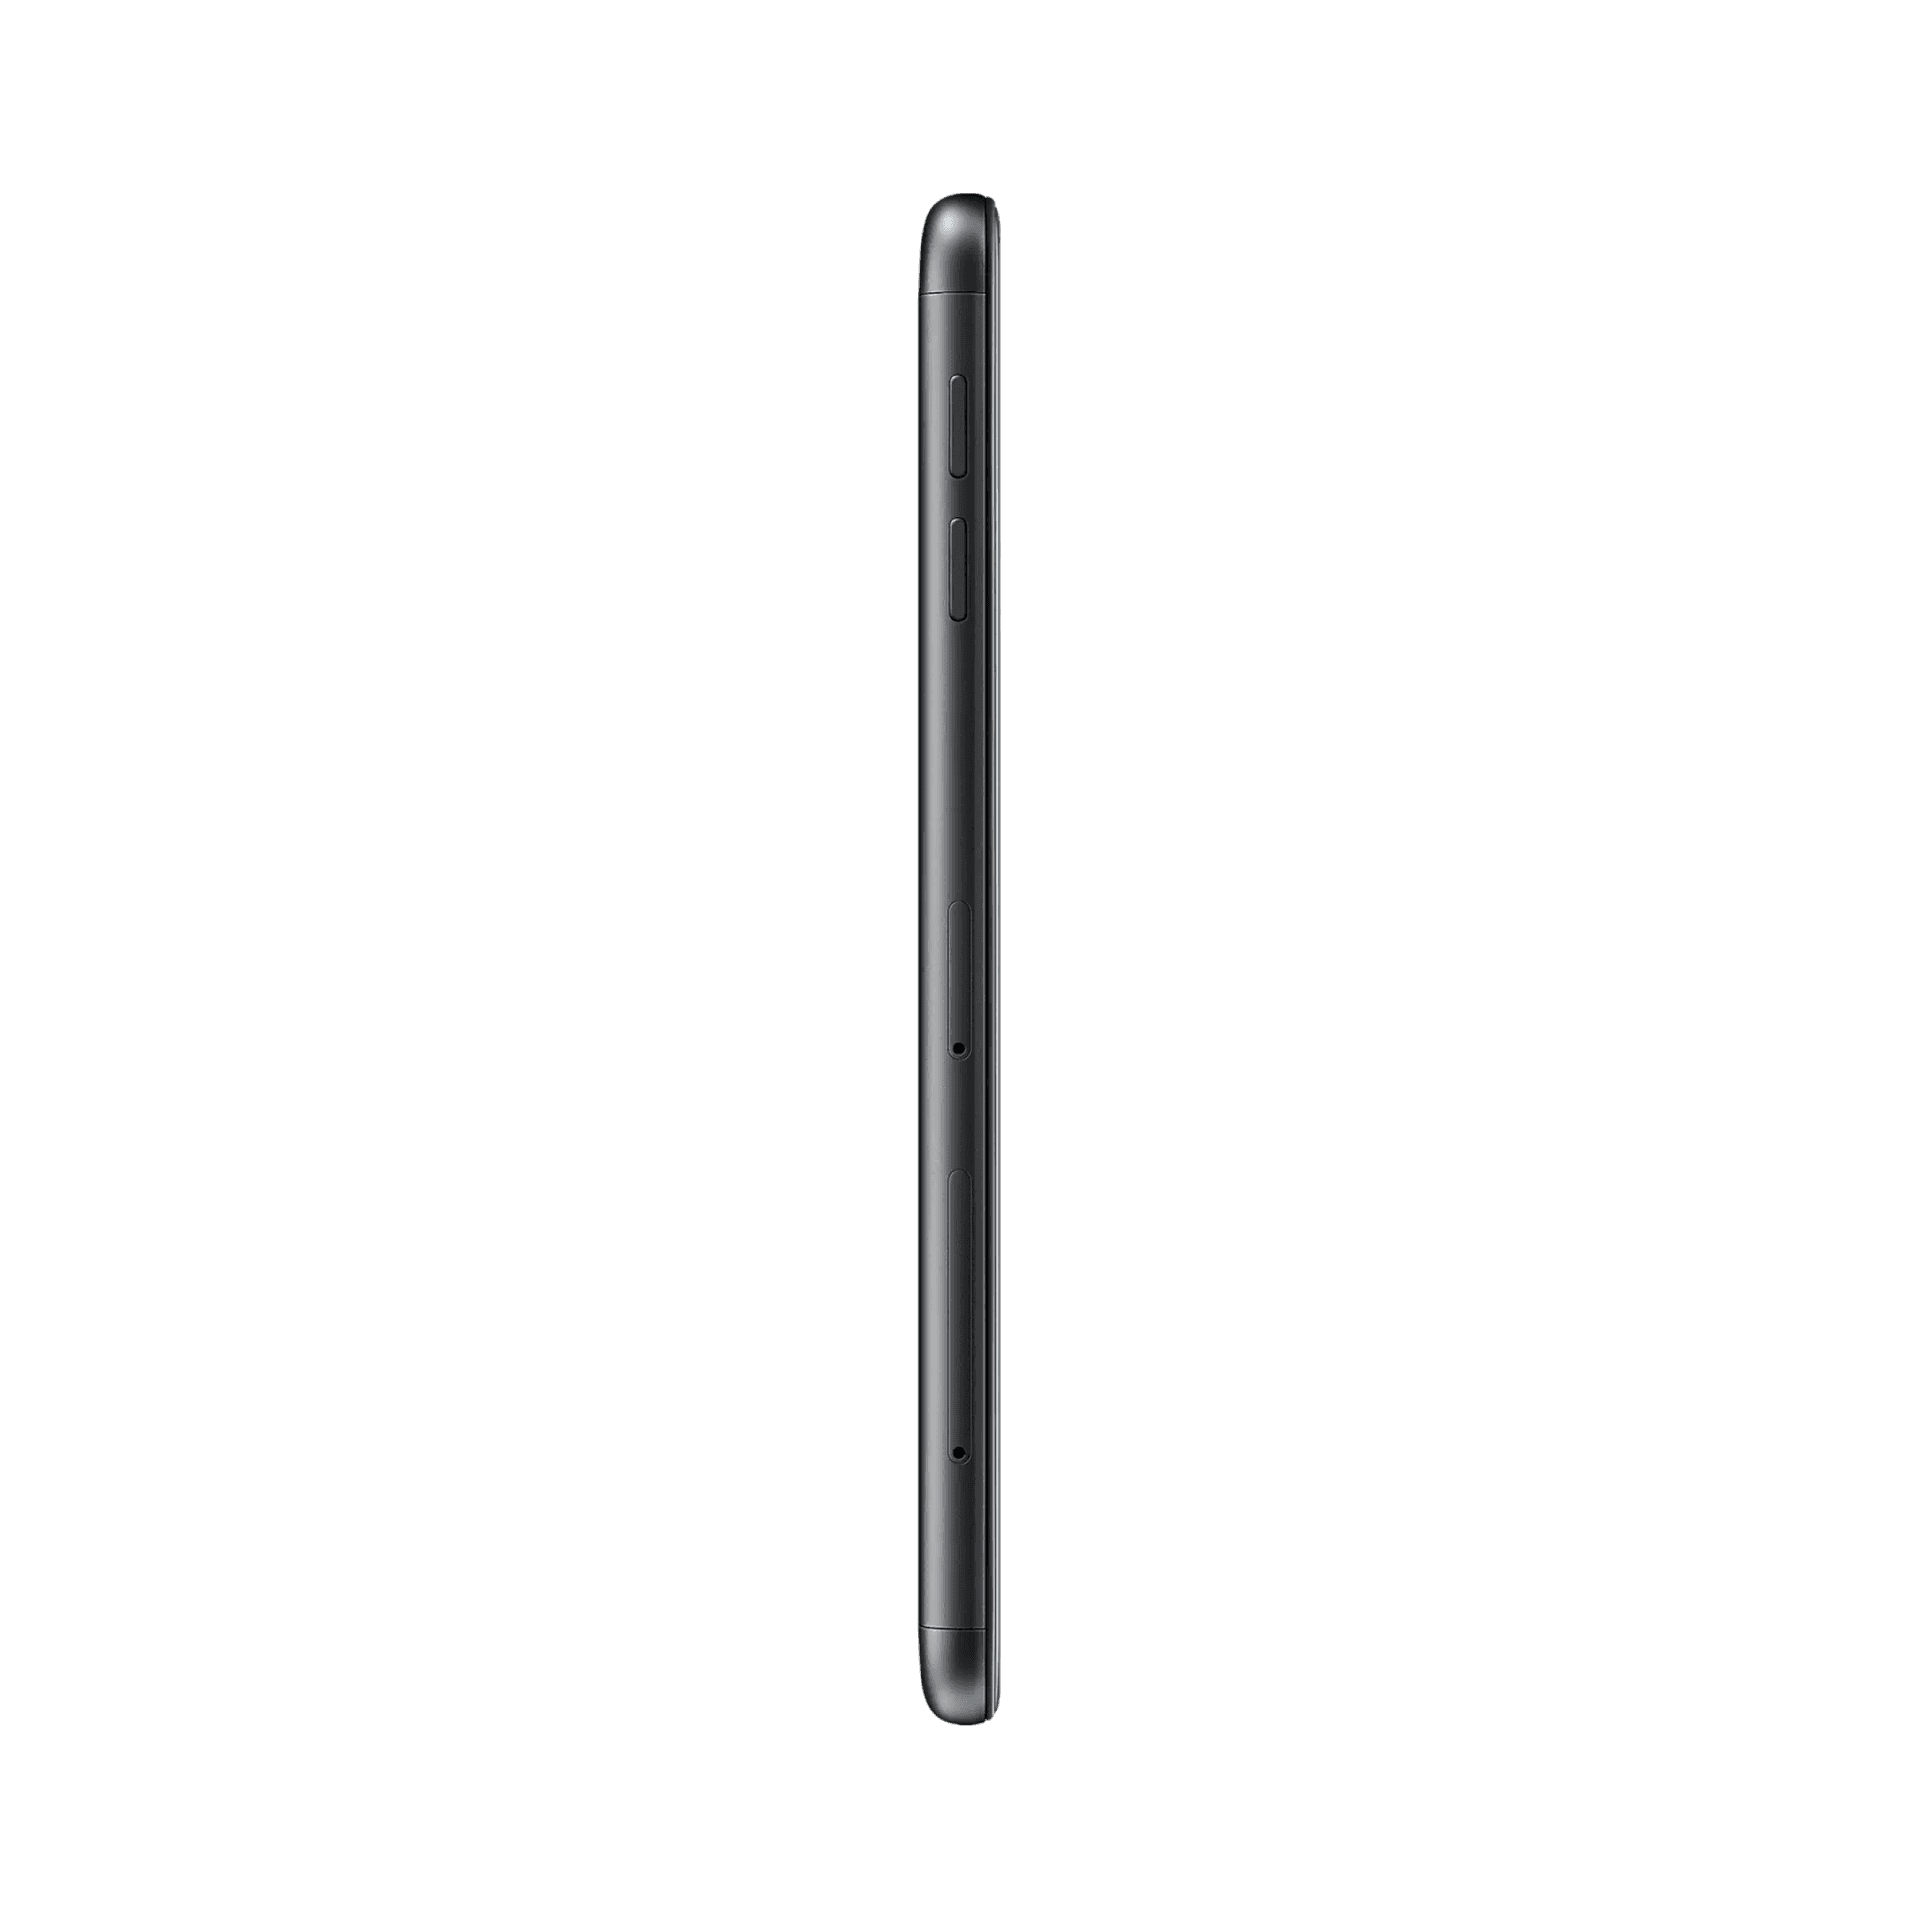 Samsung Galaxy J7 Prime 2 - 32 GB - Siyah